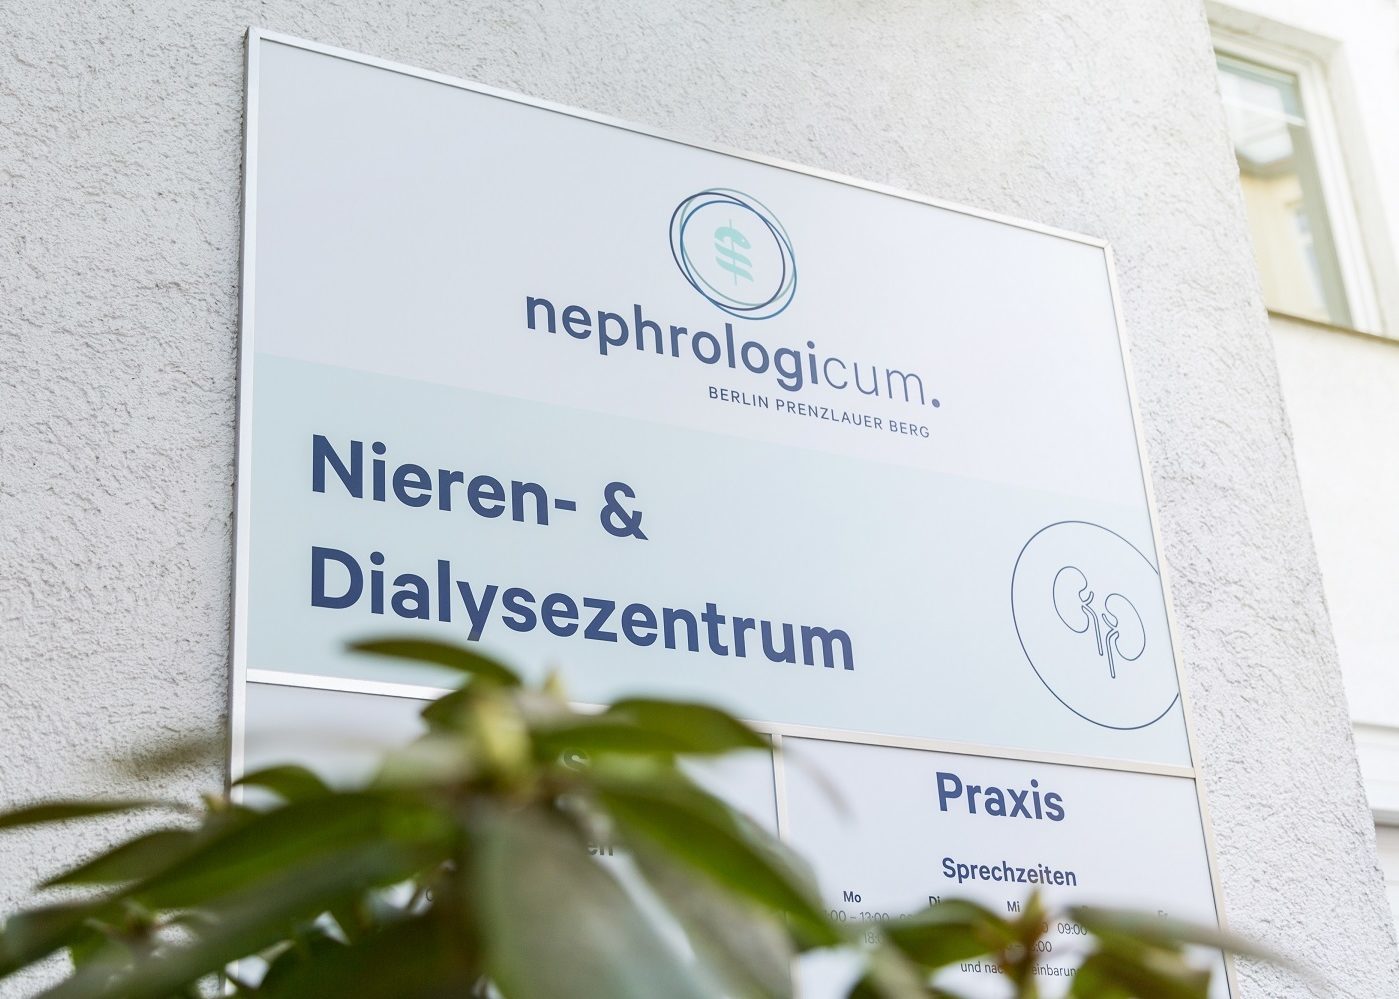 Nephrologicum Berlin Prenzlauer Berg